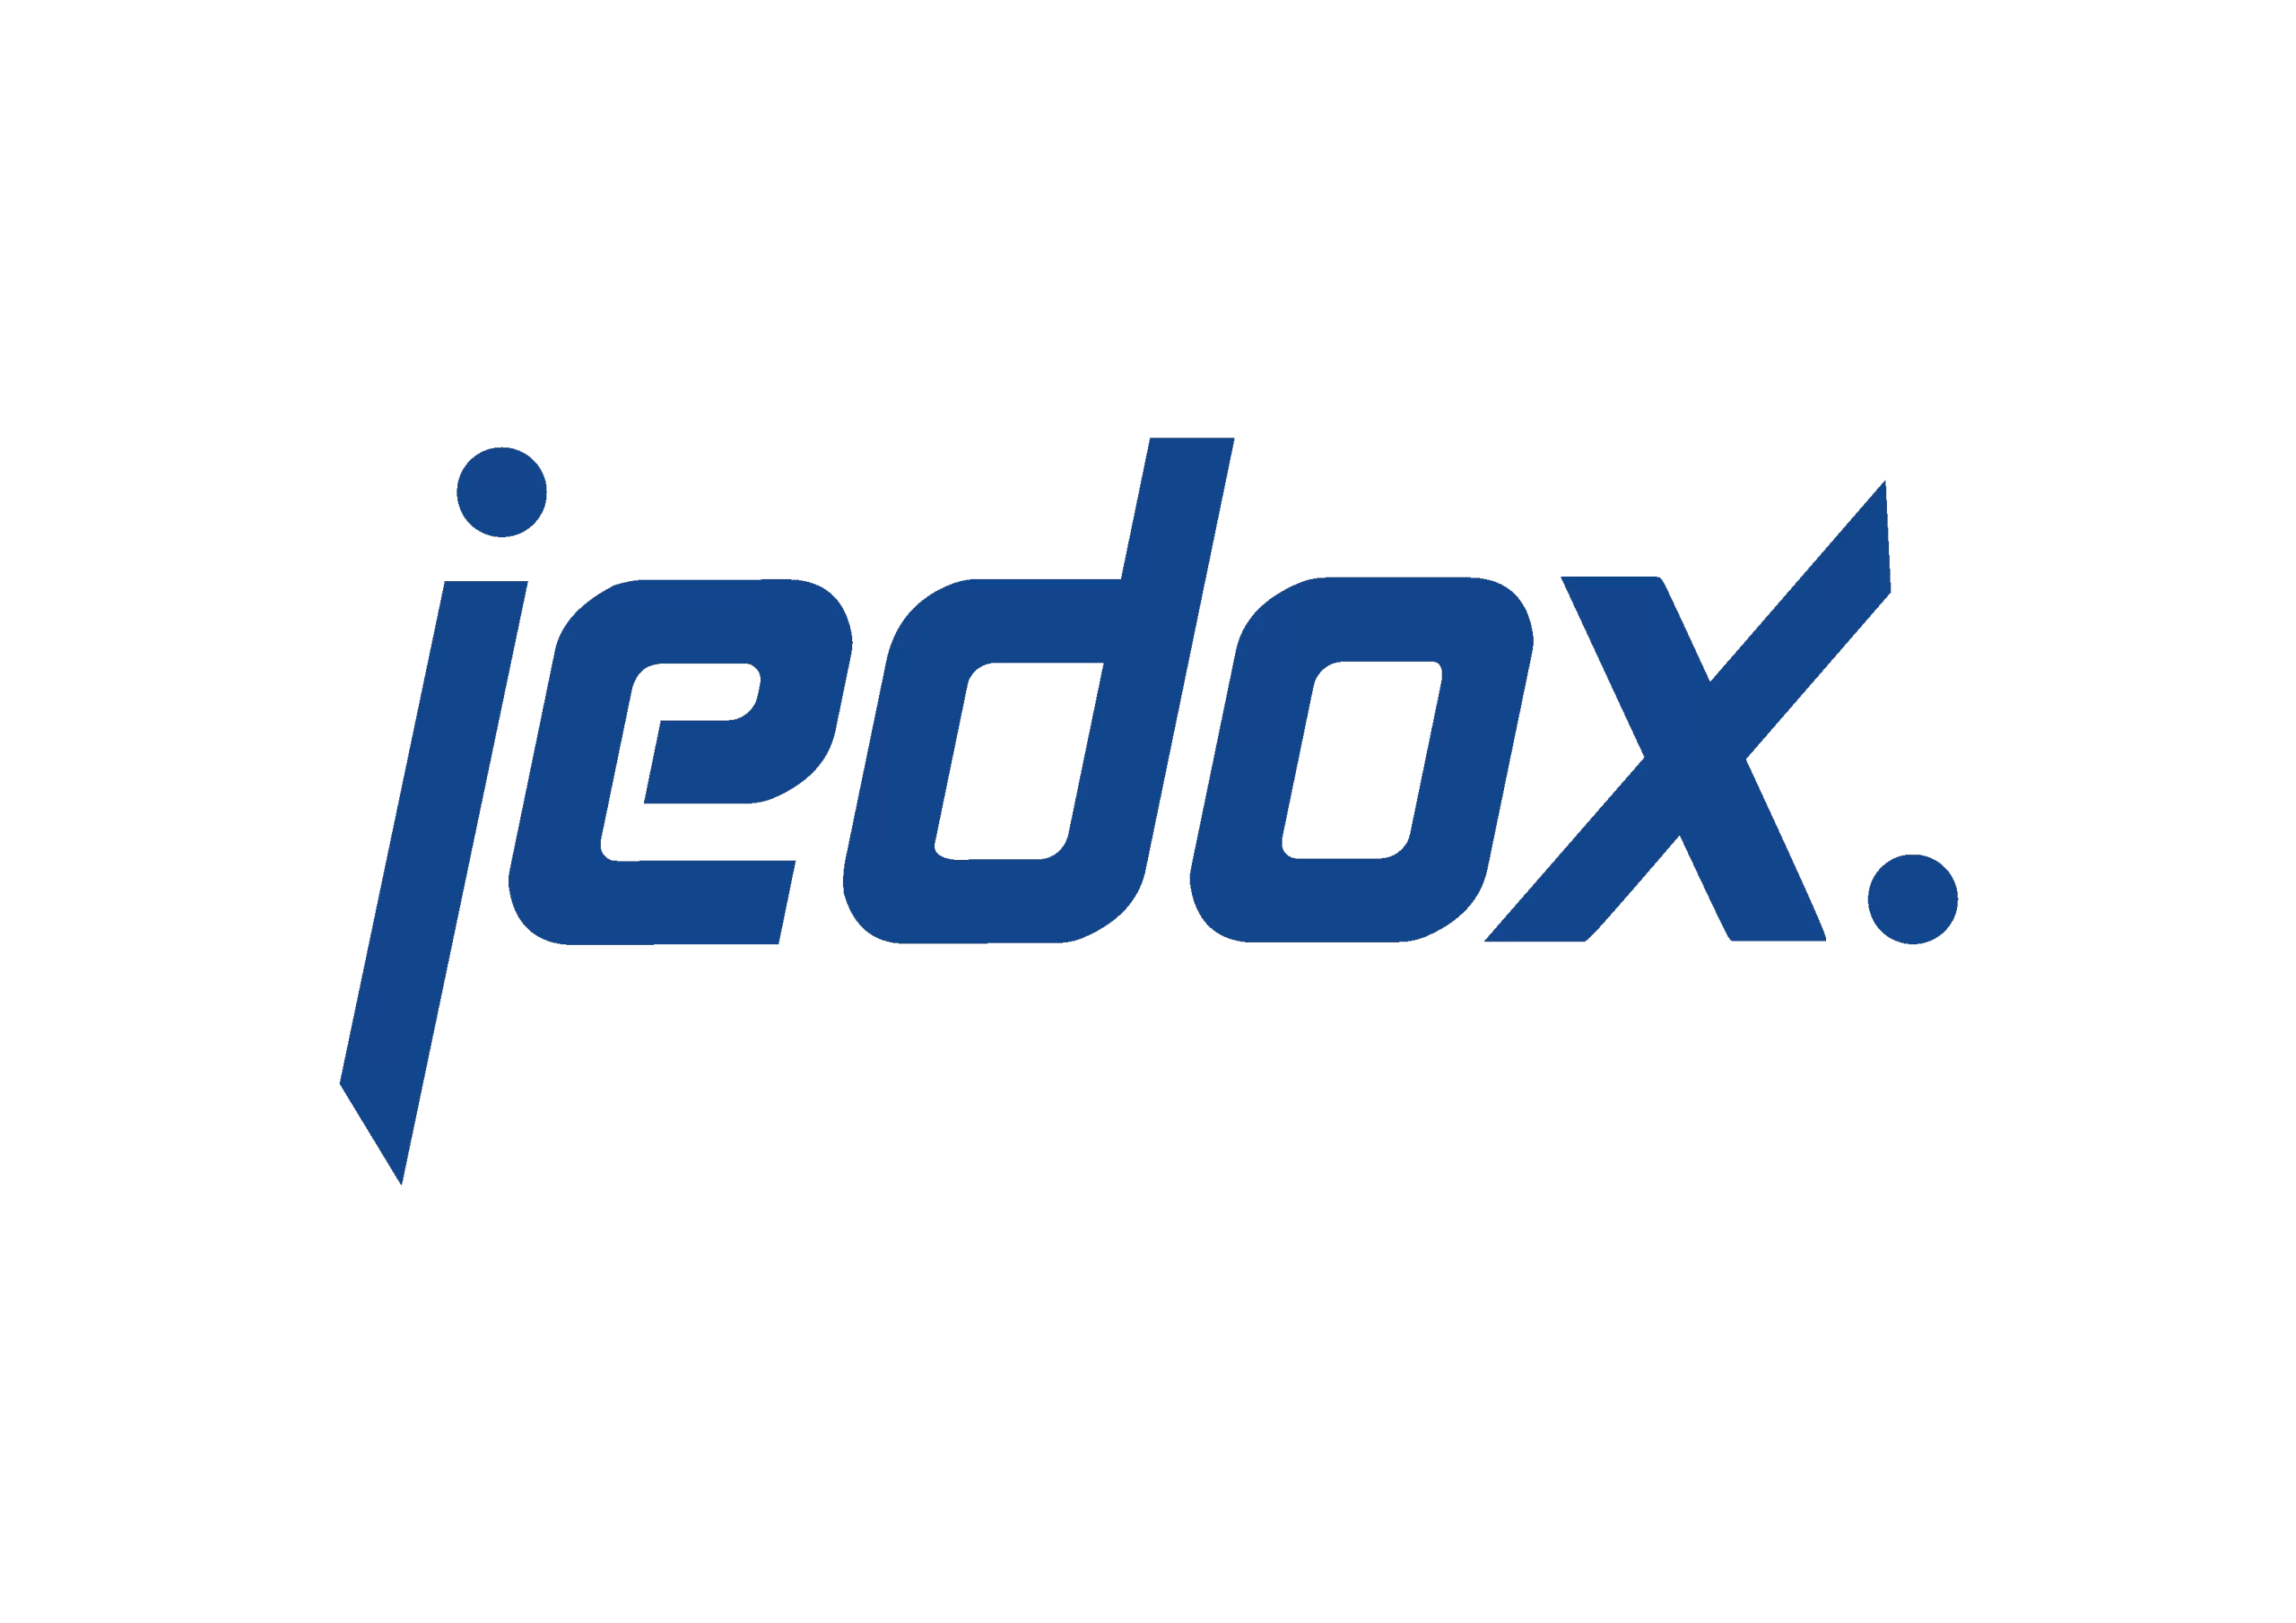 jedox 100m insight partners 150mlundentechcrunch